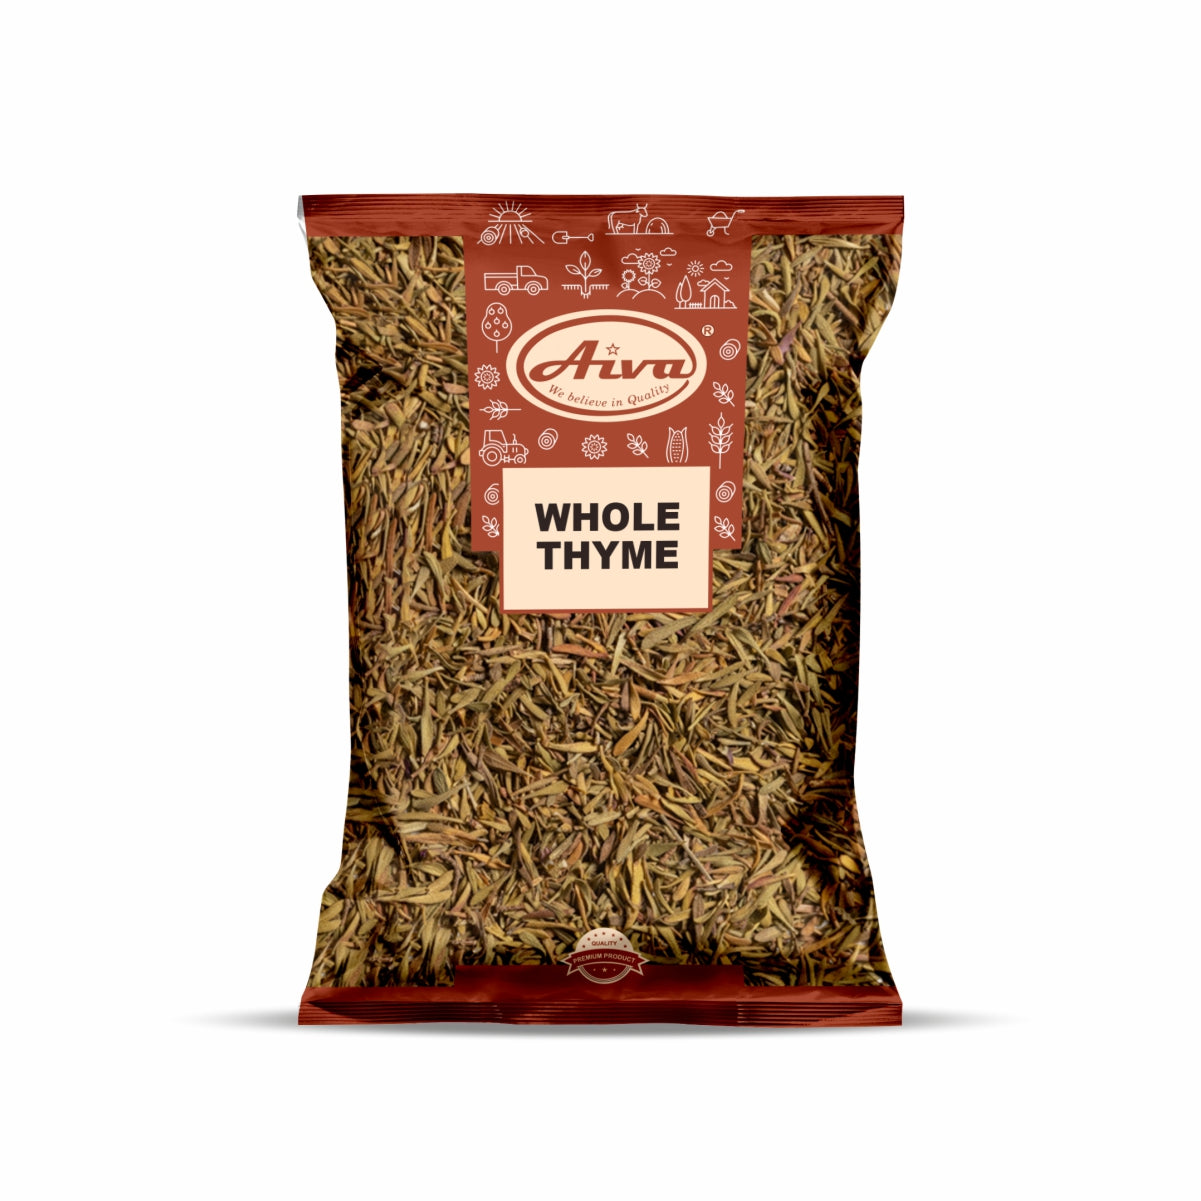 Aiva Dried whole thyme leaves / Tomillo Entero / Thymus vulgaris L.-2